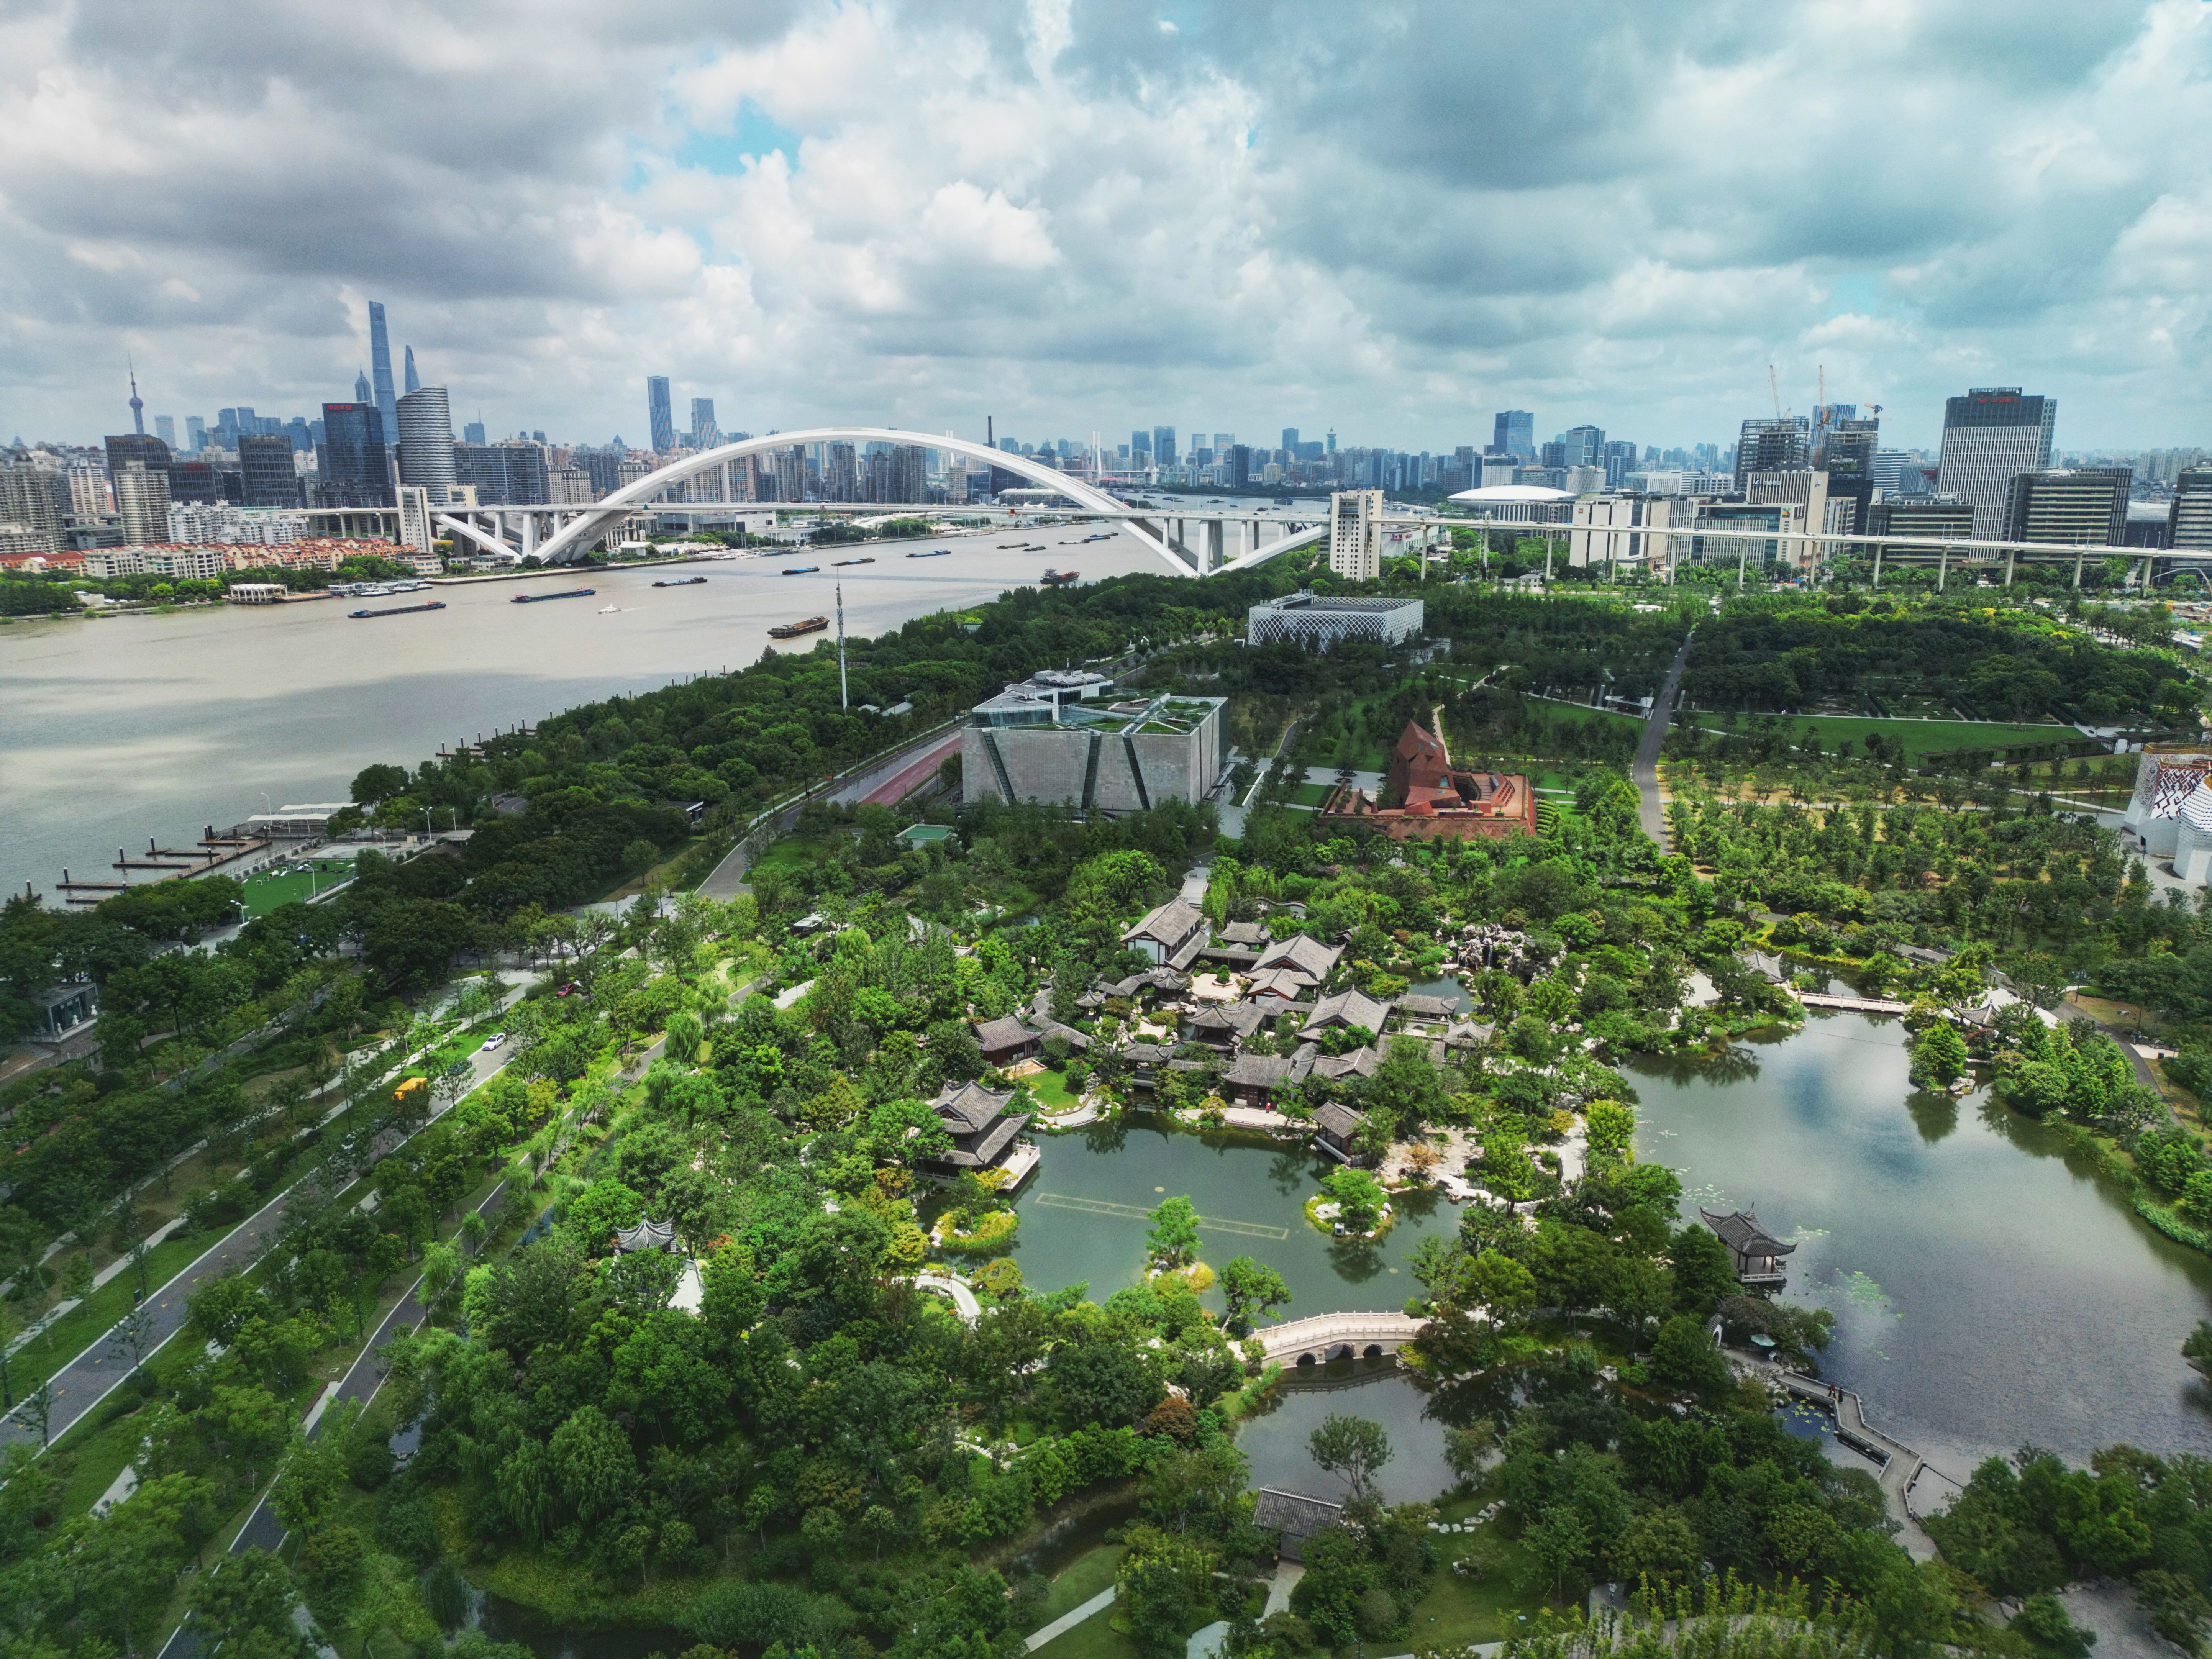 General 5773x4330 landscape city drone photo Shanghai water trees bridge sky clouds building